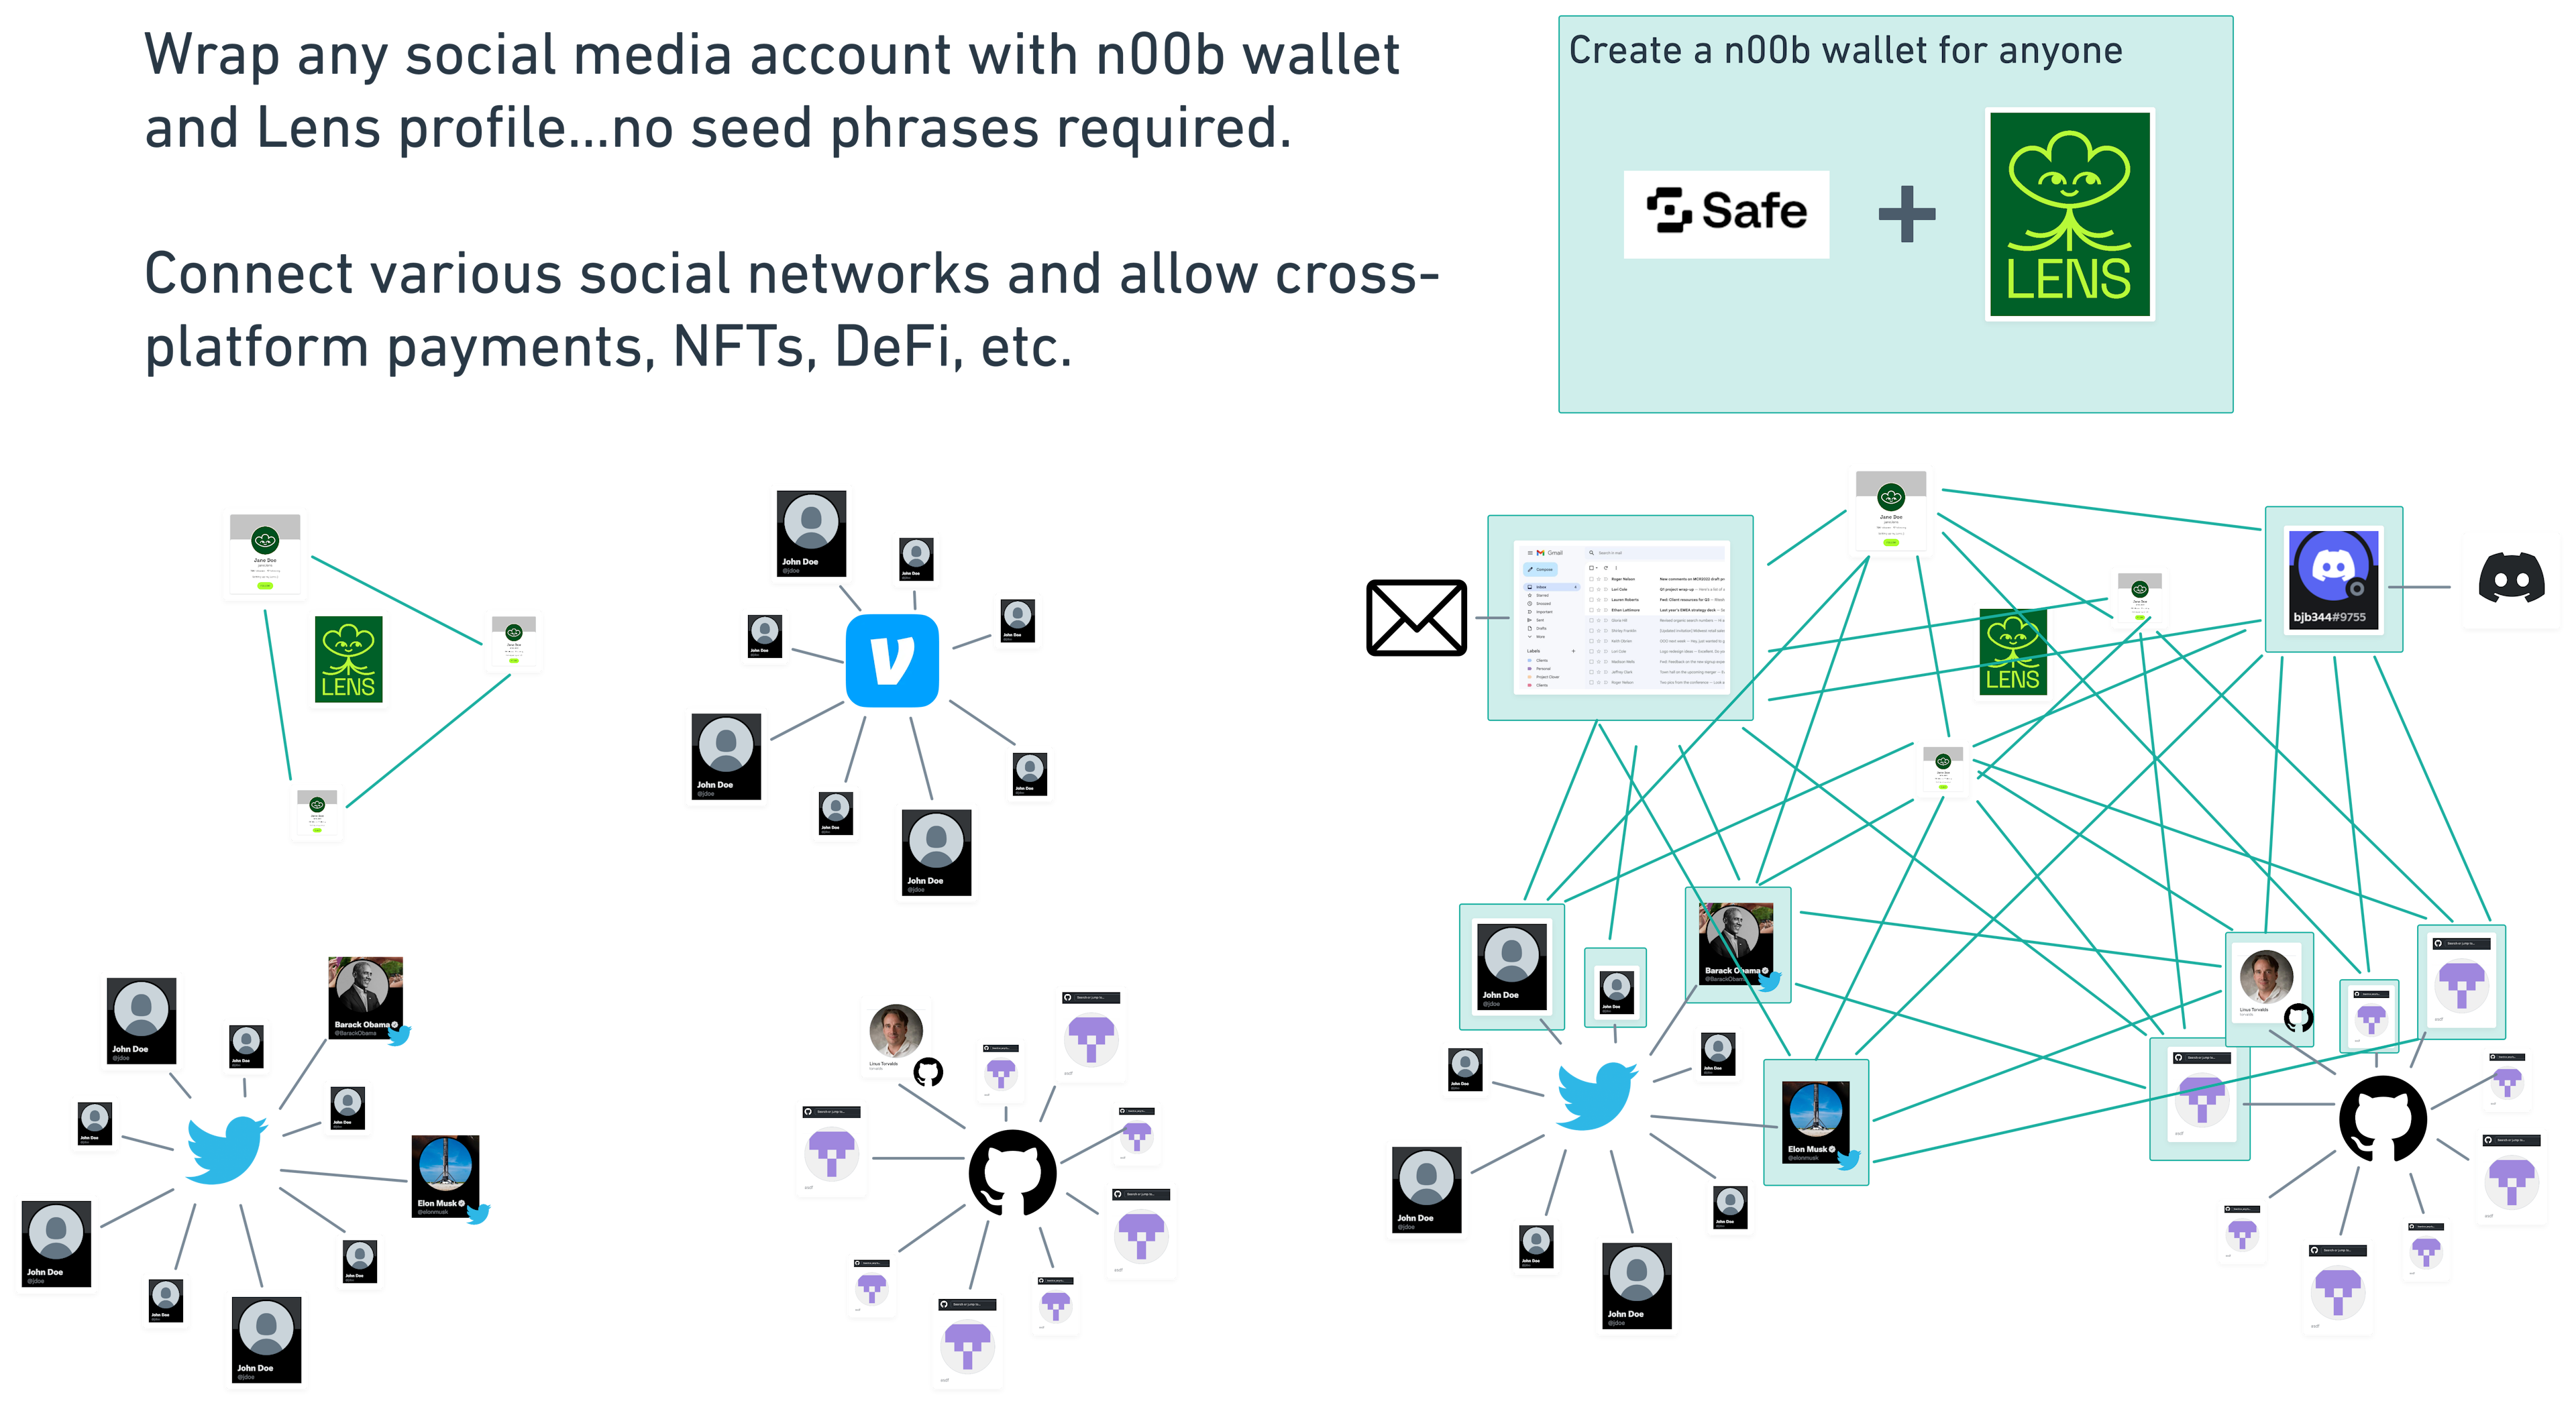 n00b wallets bring a web3 wallet and Lens social graph to 